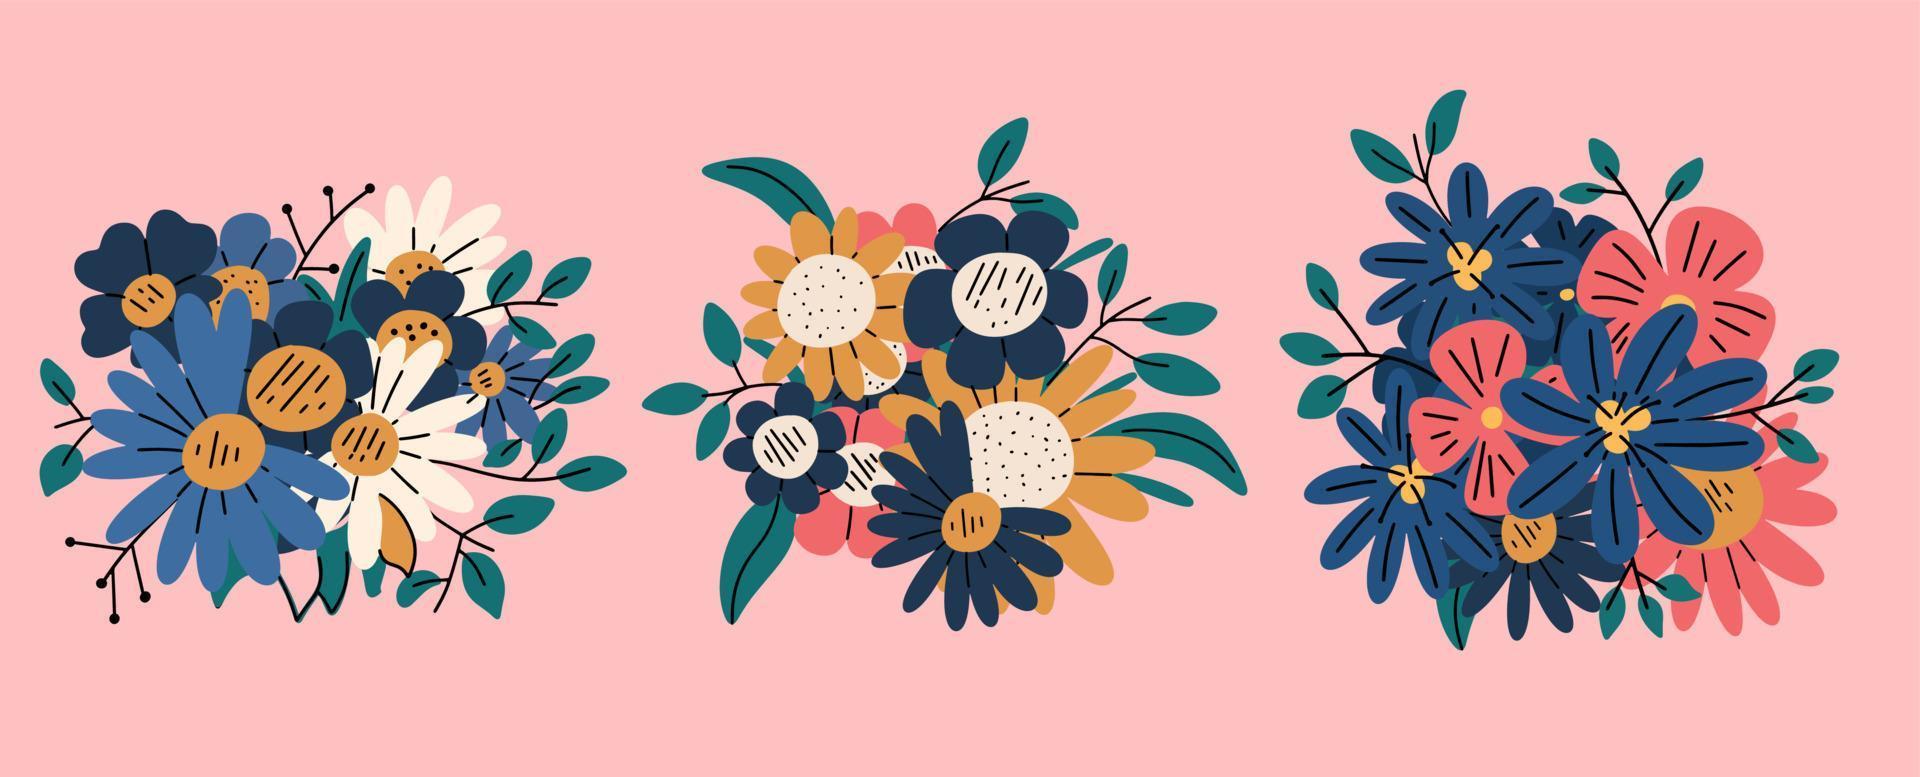 en uppsättning av olika buketter av blommor i de stil av hand teckning. design blommig dekor. baner, vykort, affisch. vektor illustration